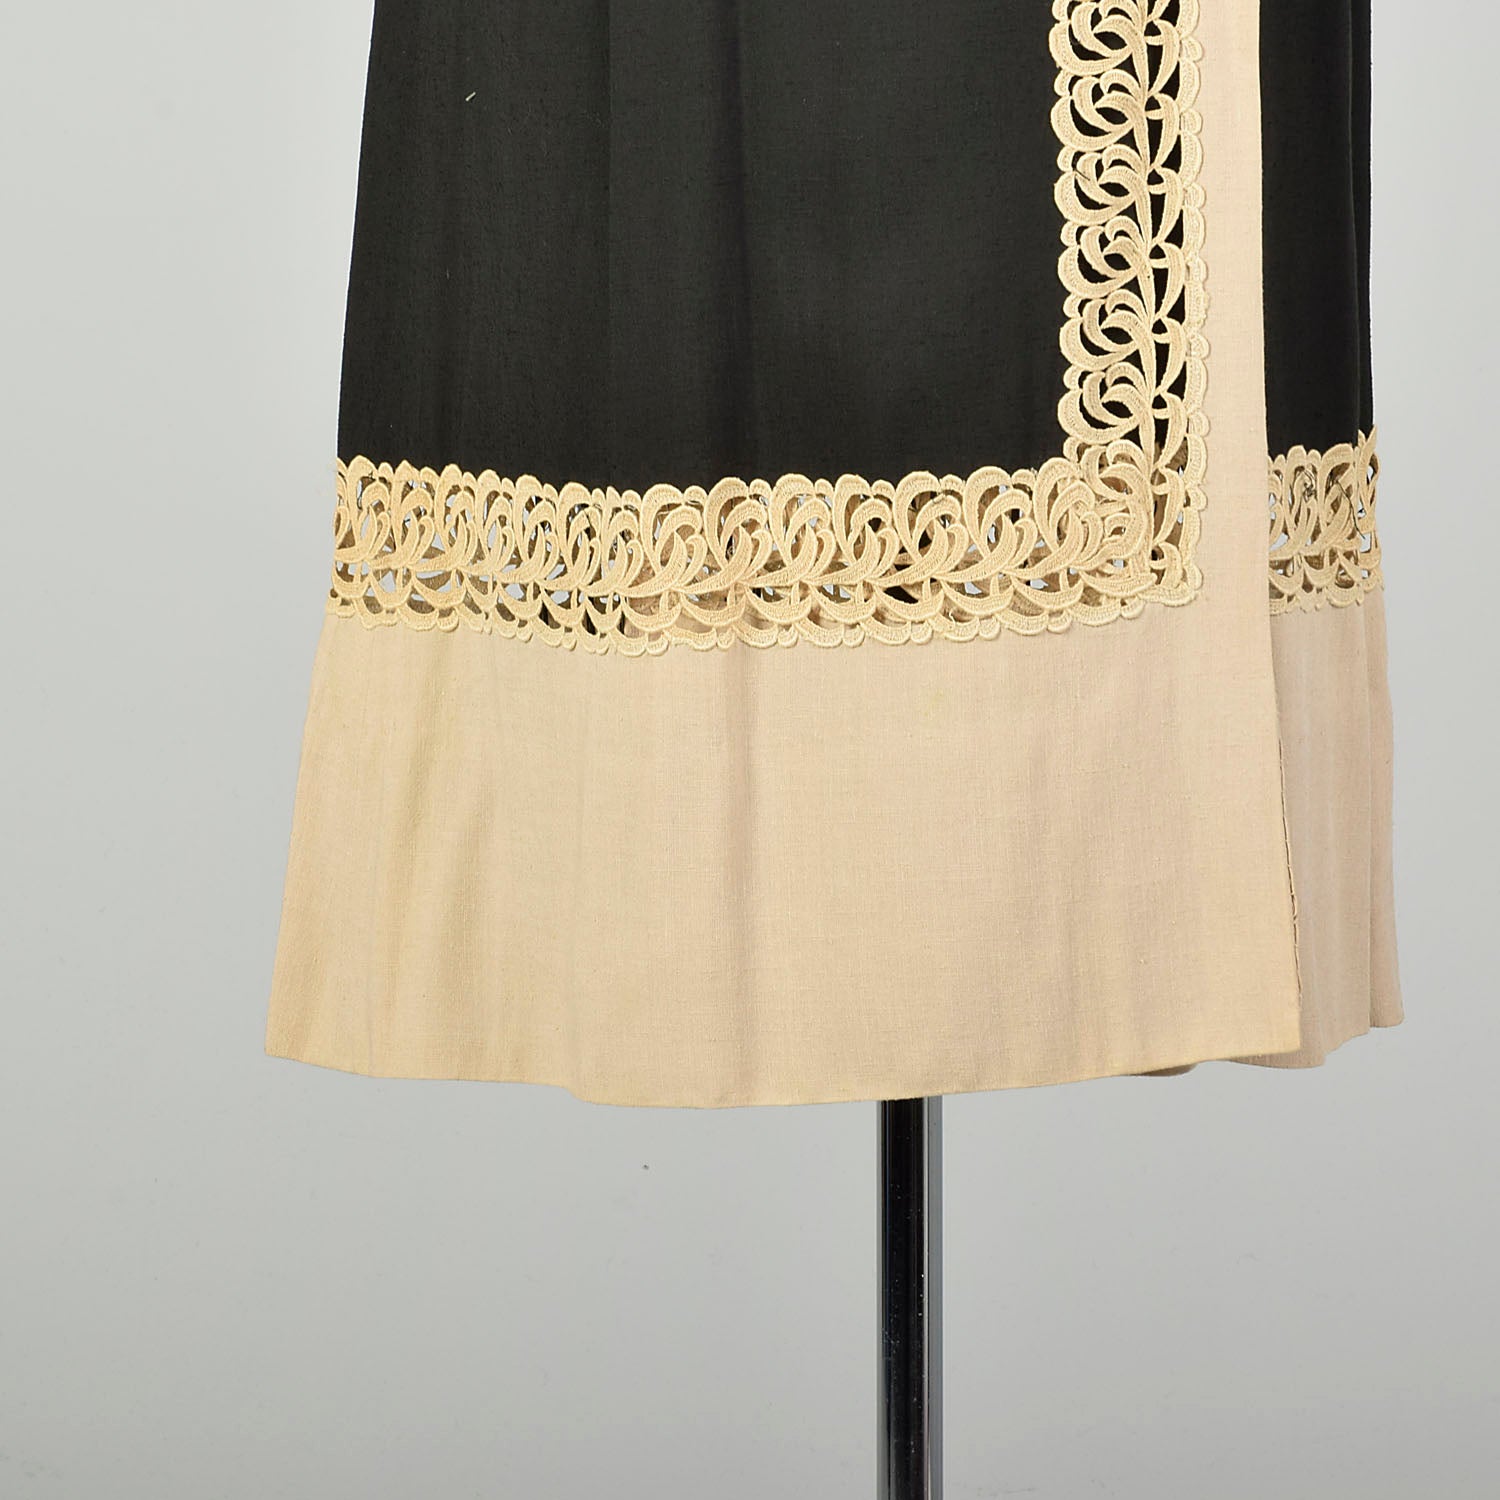 Large 1950s Wrap Dress Asymmetric Cape Collar Black Cream Applique